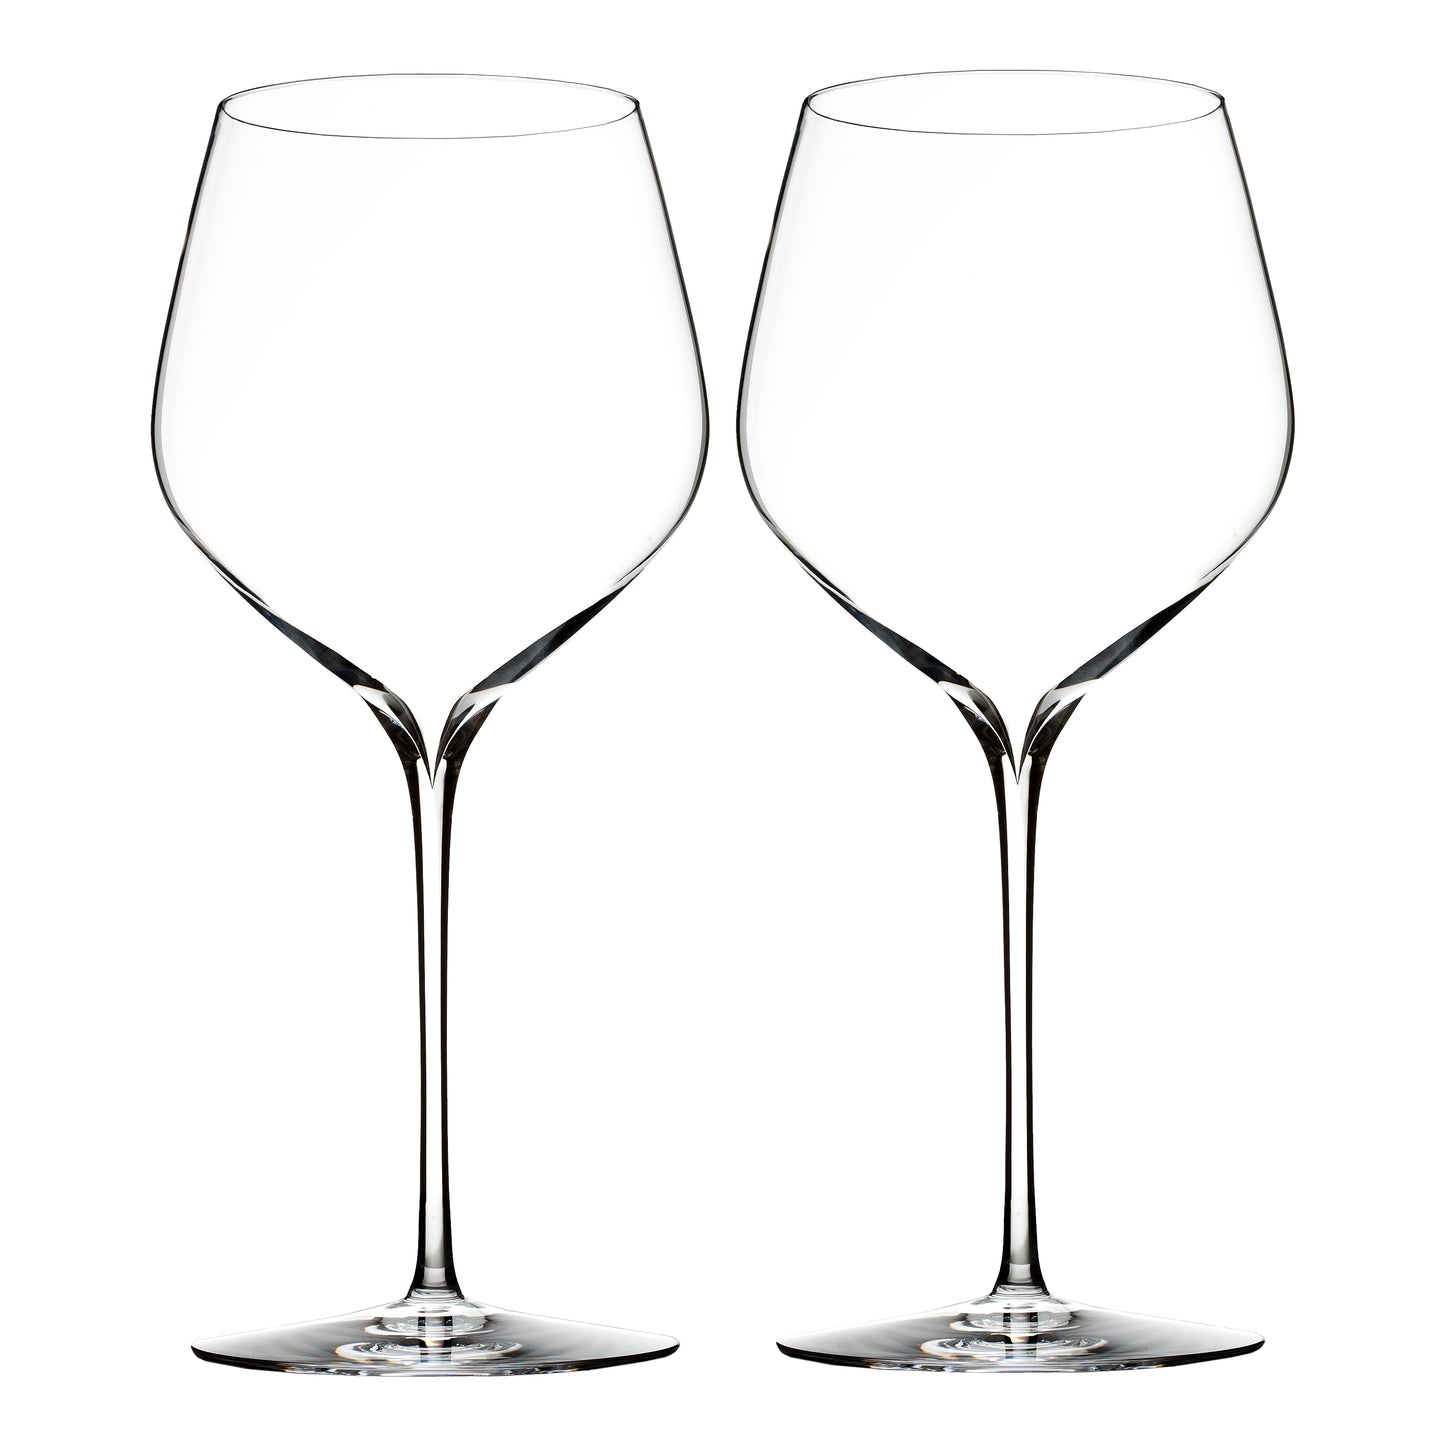 Waterford Elegance Cabernet Sauvignon Wine Glass, Set of 2